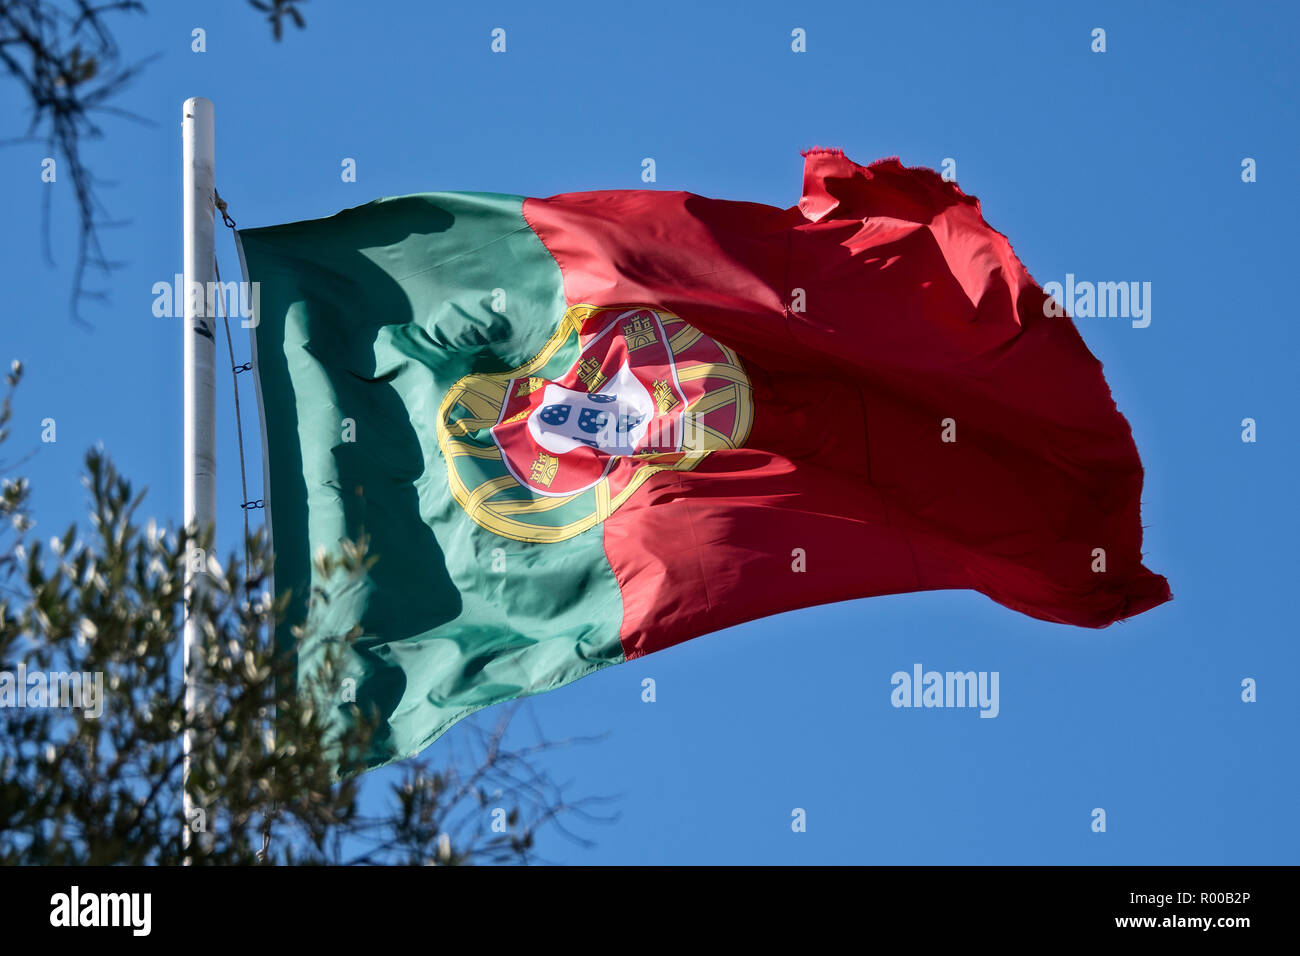 Flagge / Fahne Portugal 